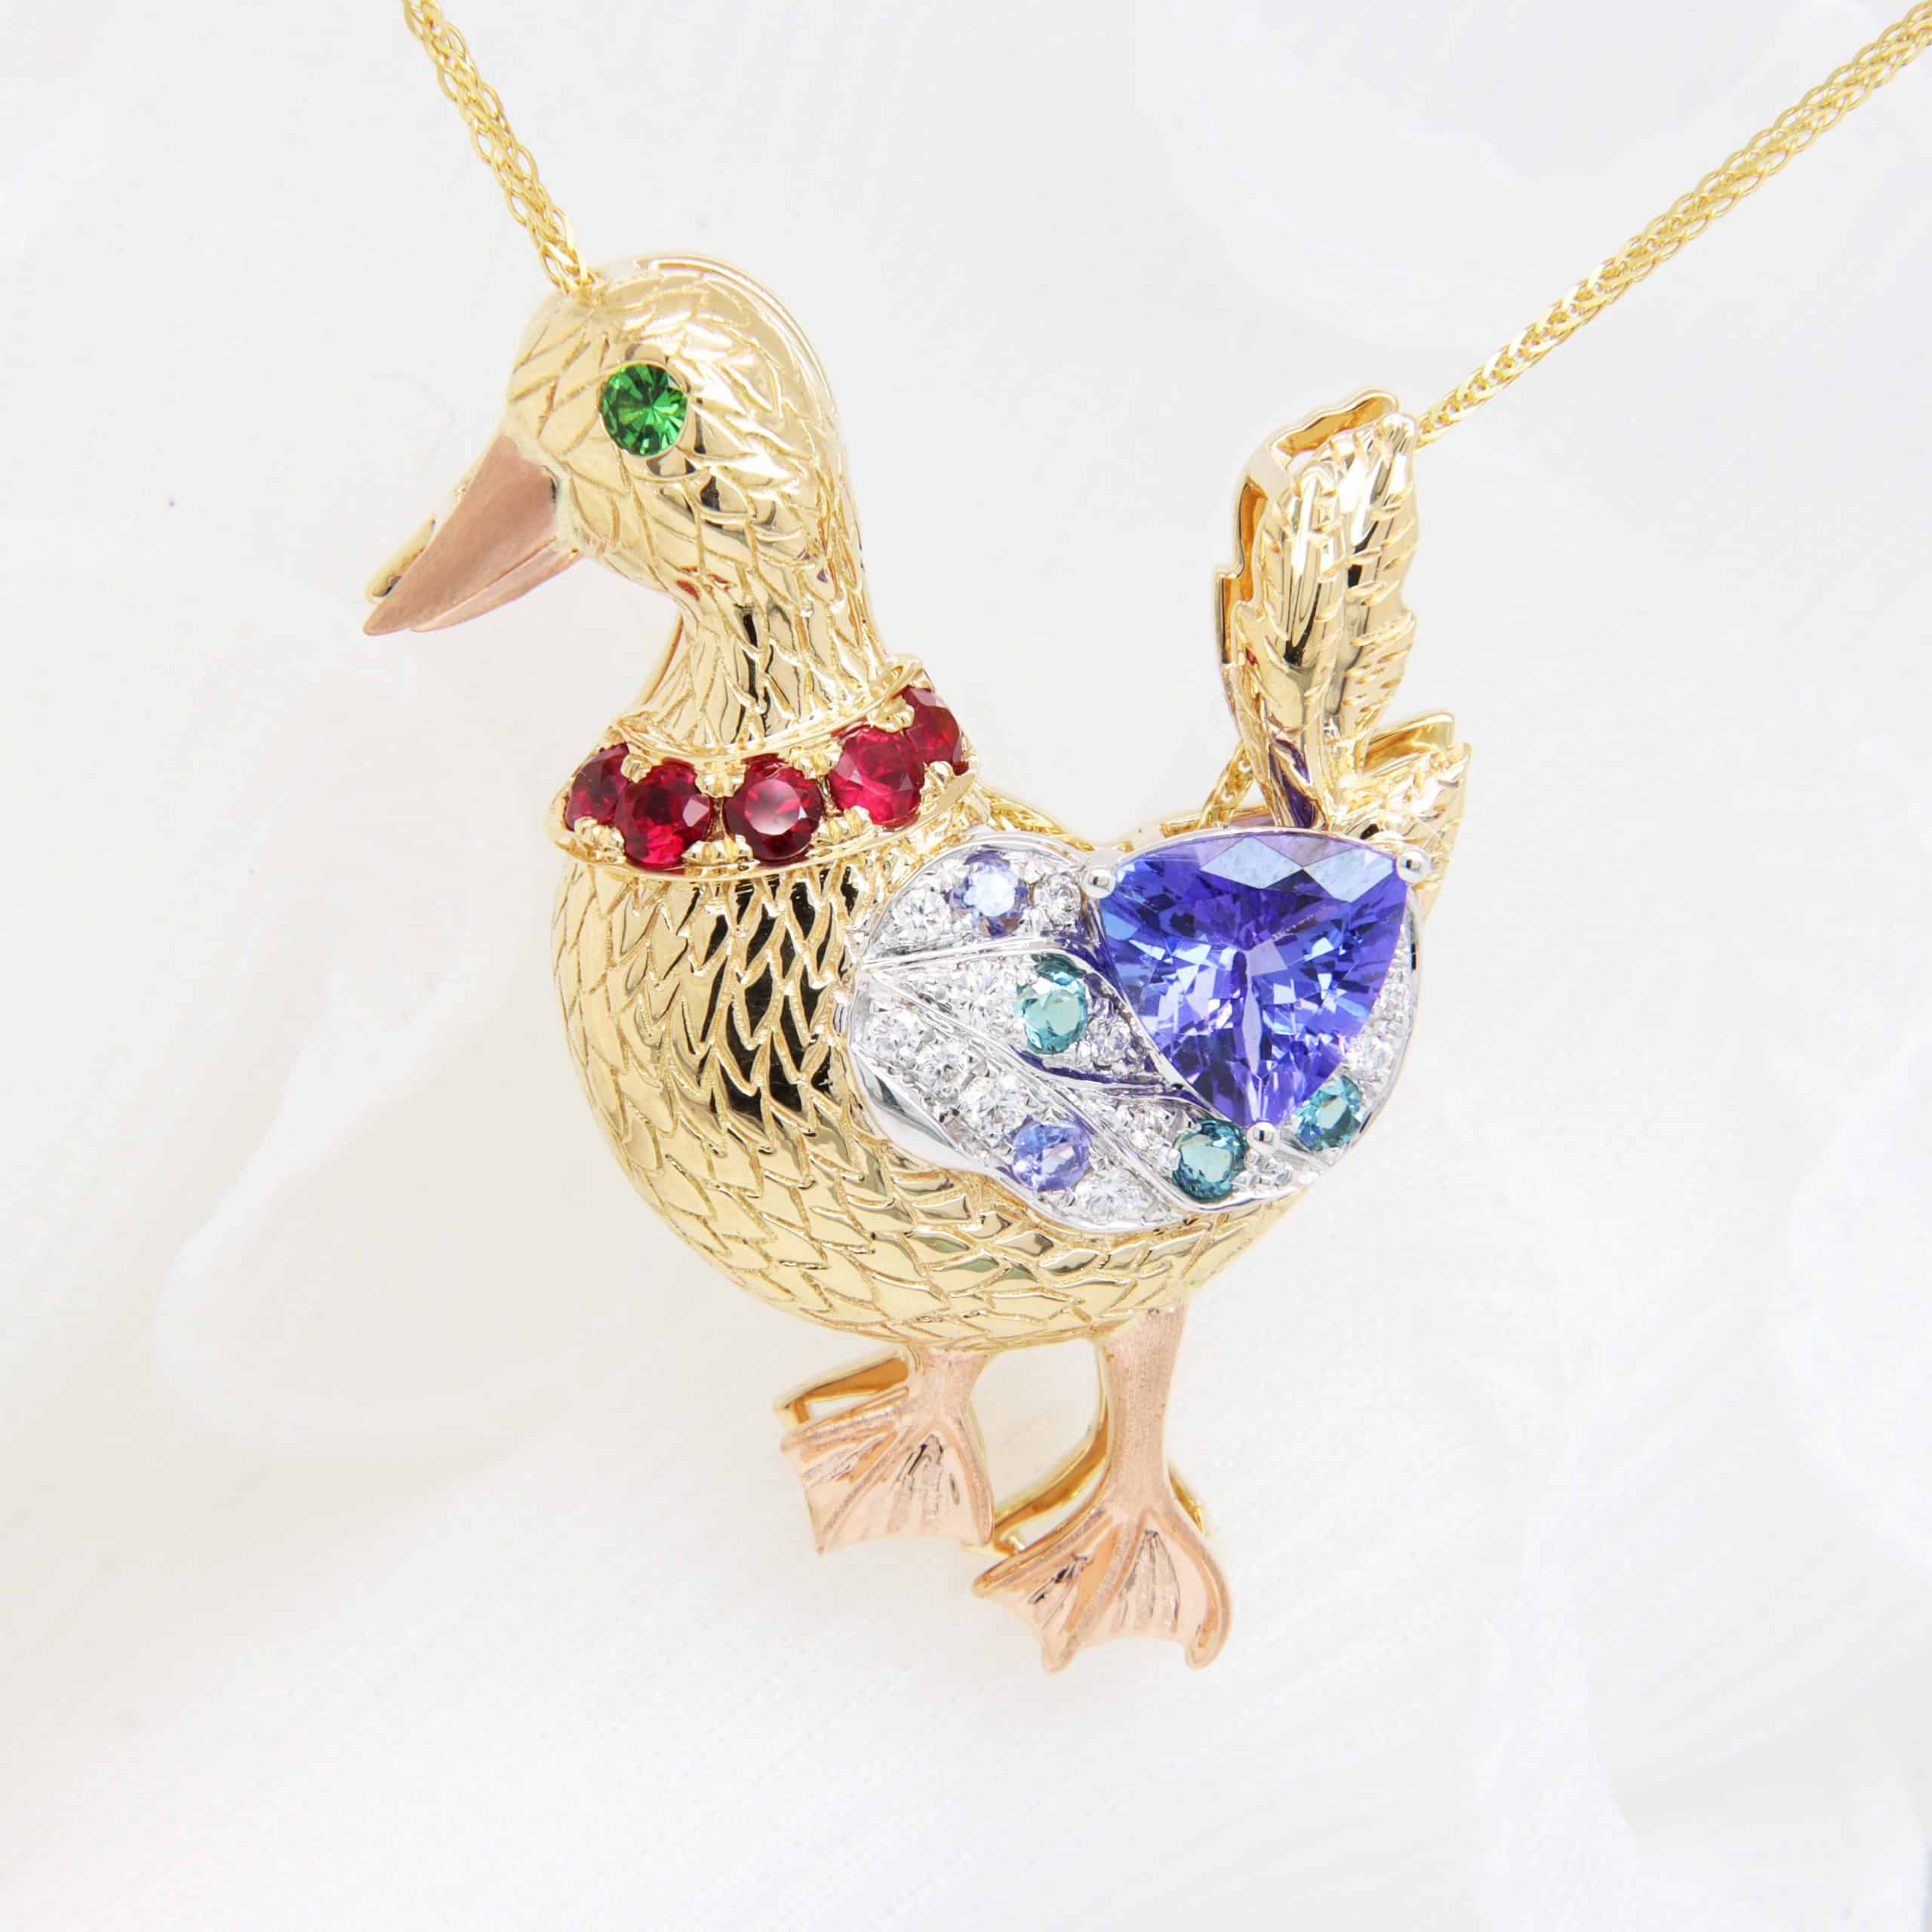 Fine Jewelry design with animals - High Jewelry Design with customised jewellery